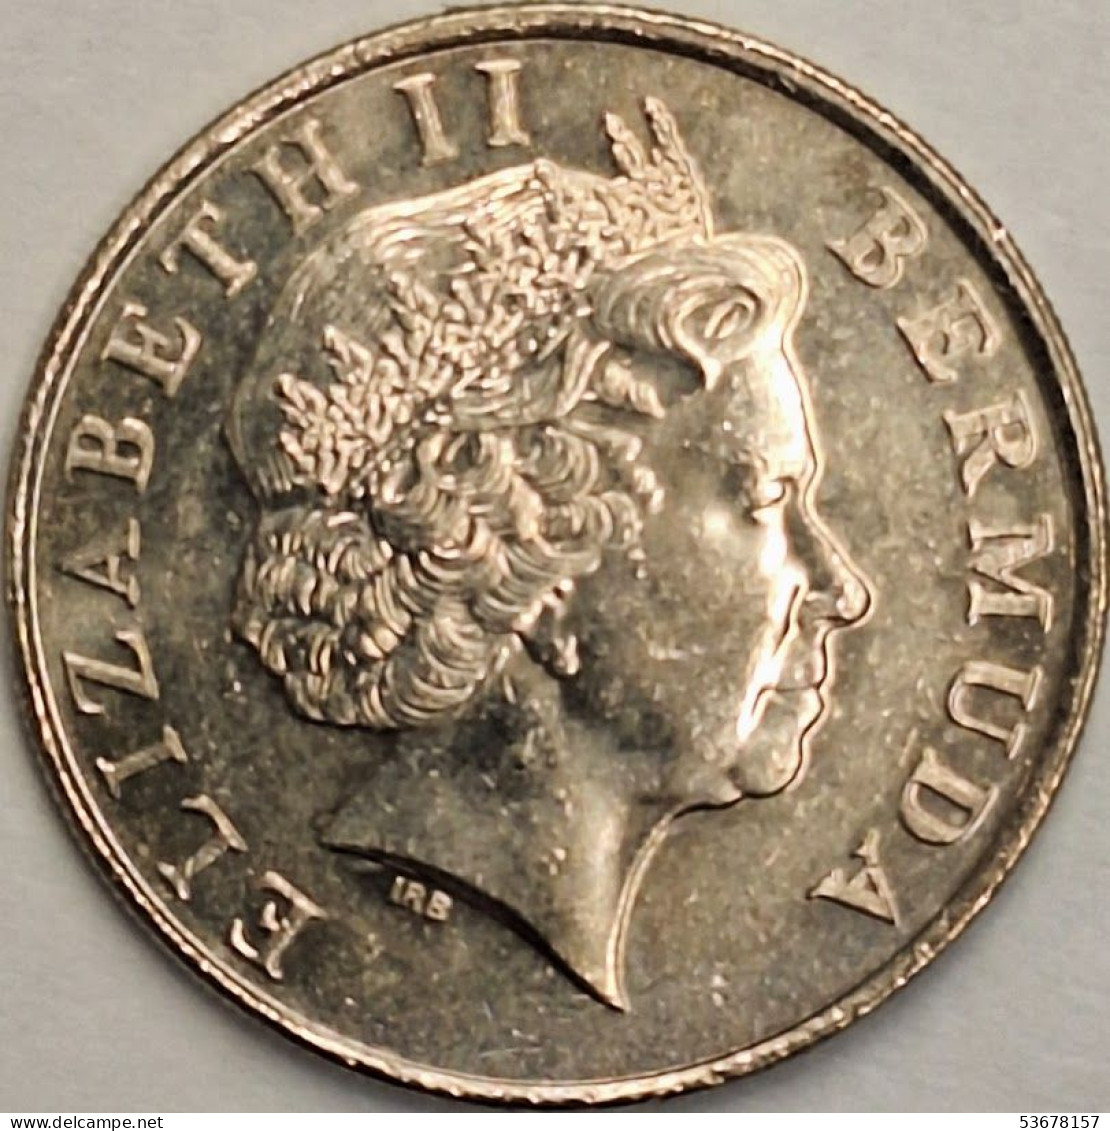 Bermuda - 25 Cents 2005, KM# 110 (#3233) - Bermudas